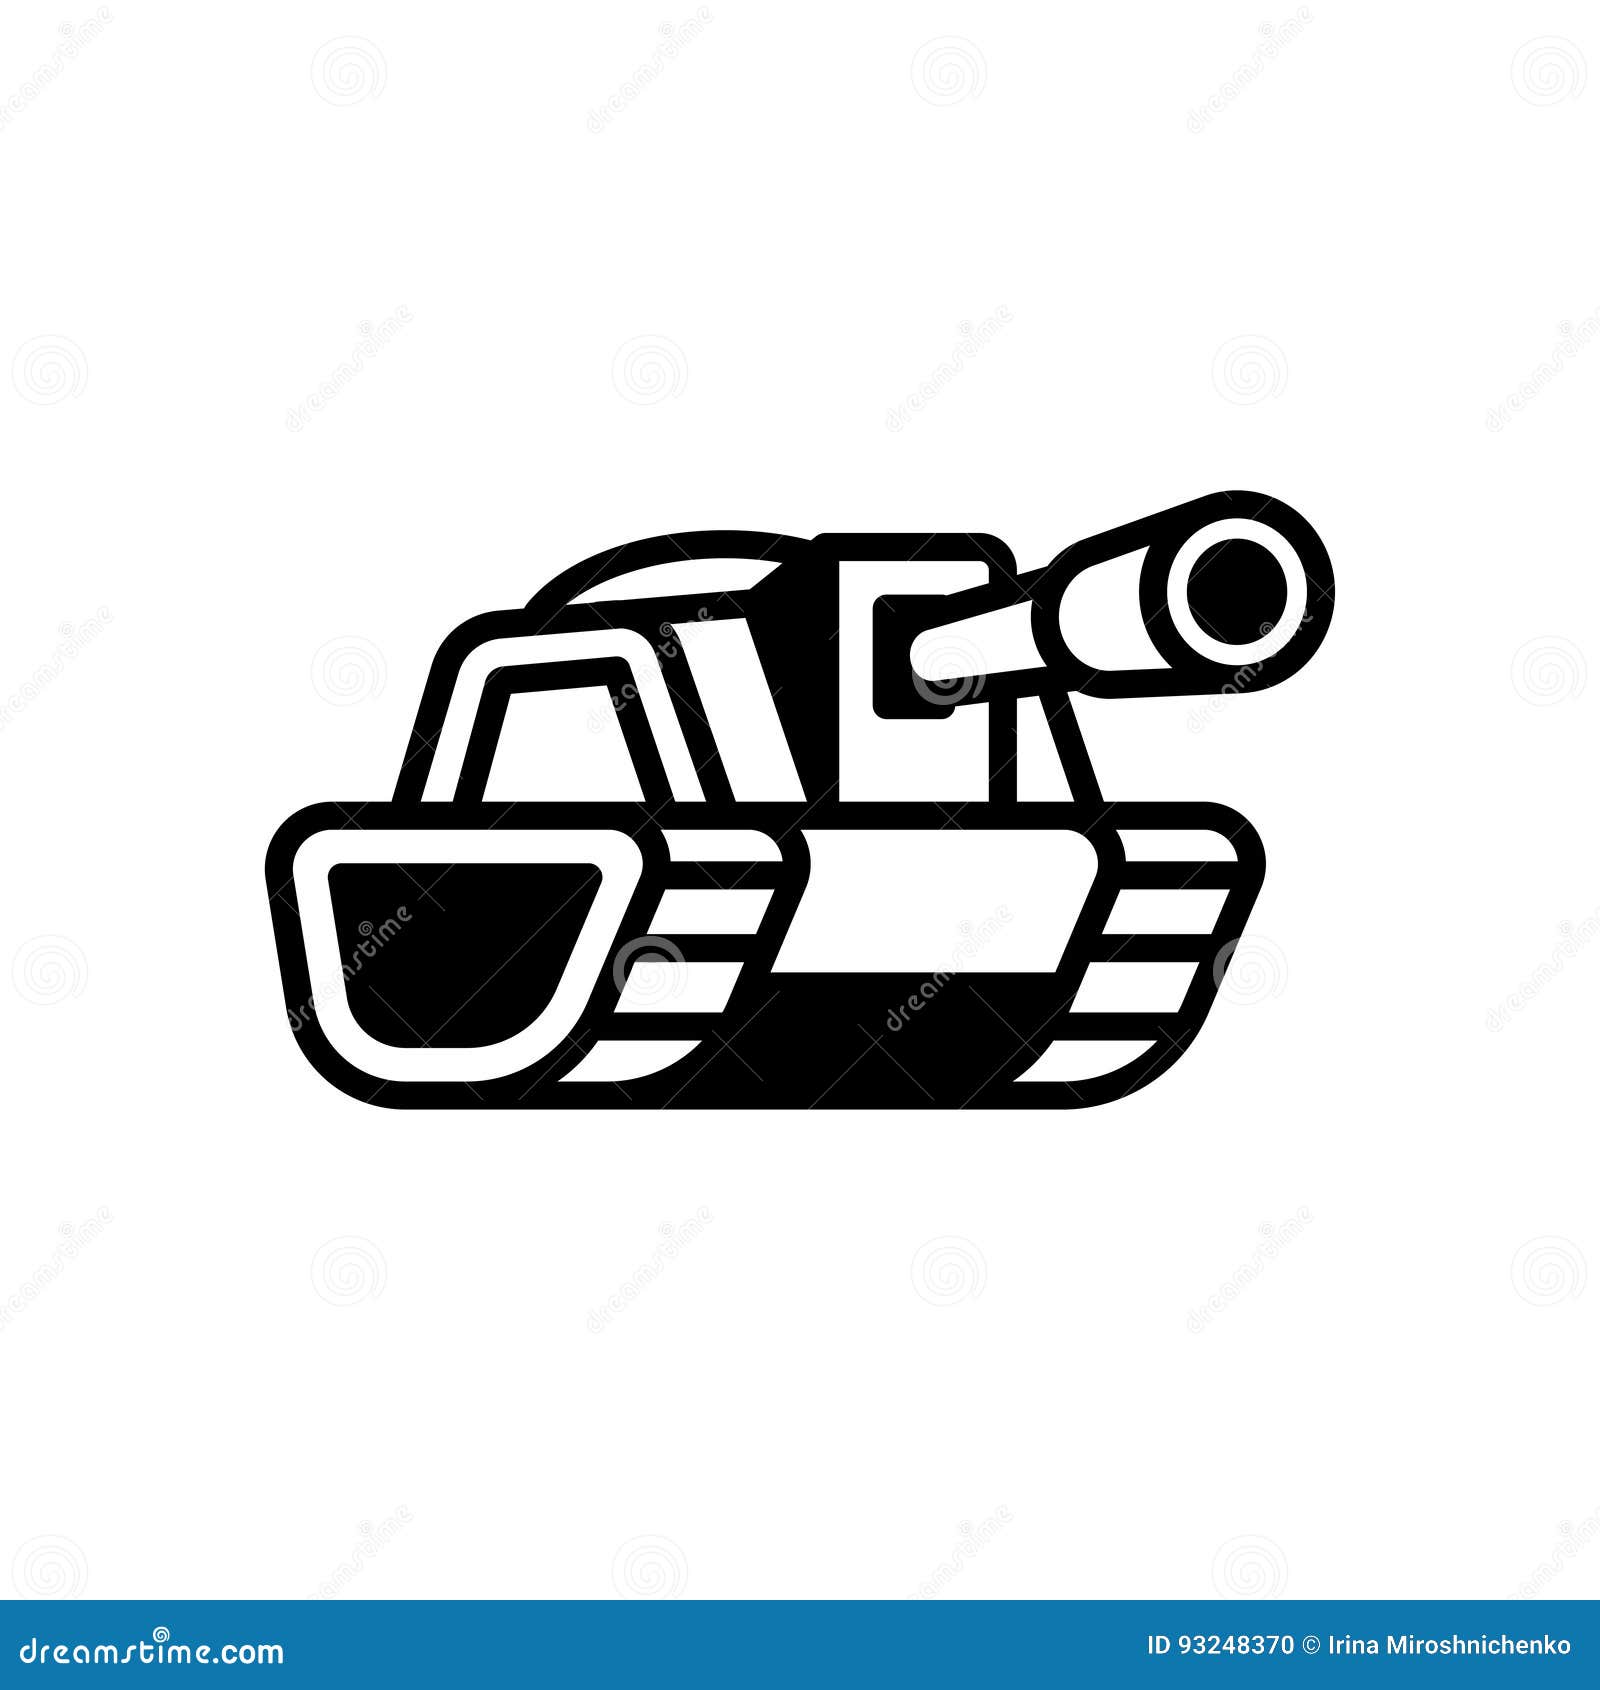 Tank logo illustration stock vector. Illustration of conflict